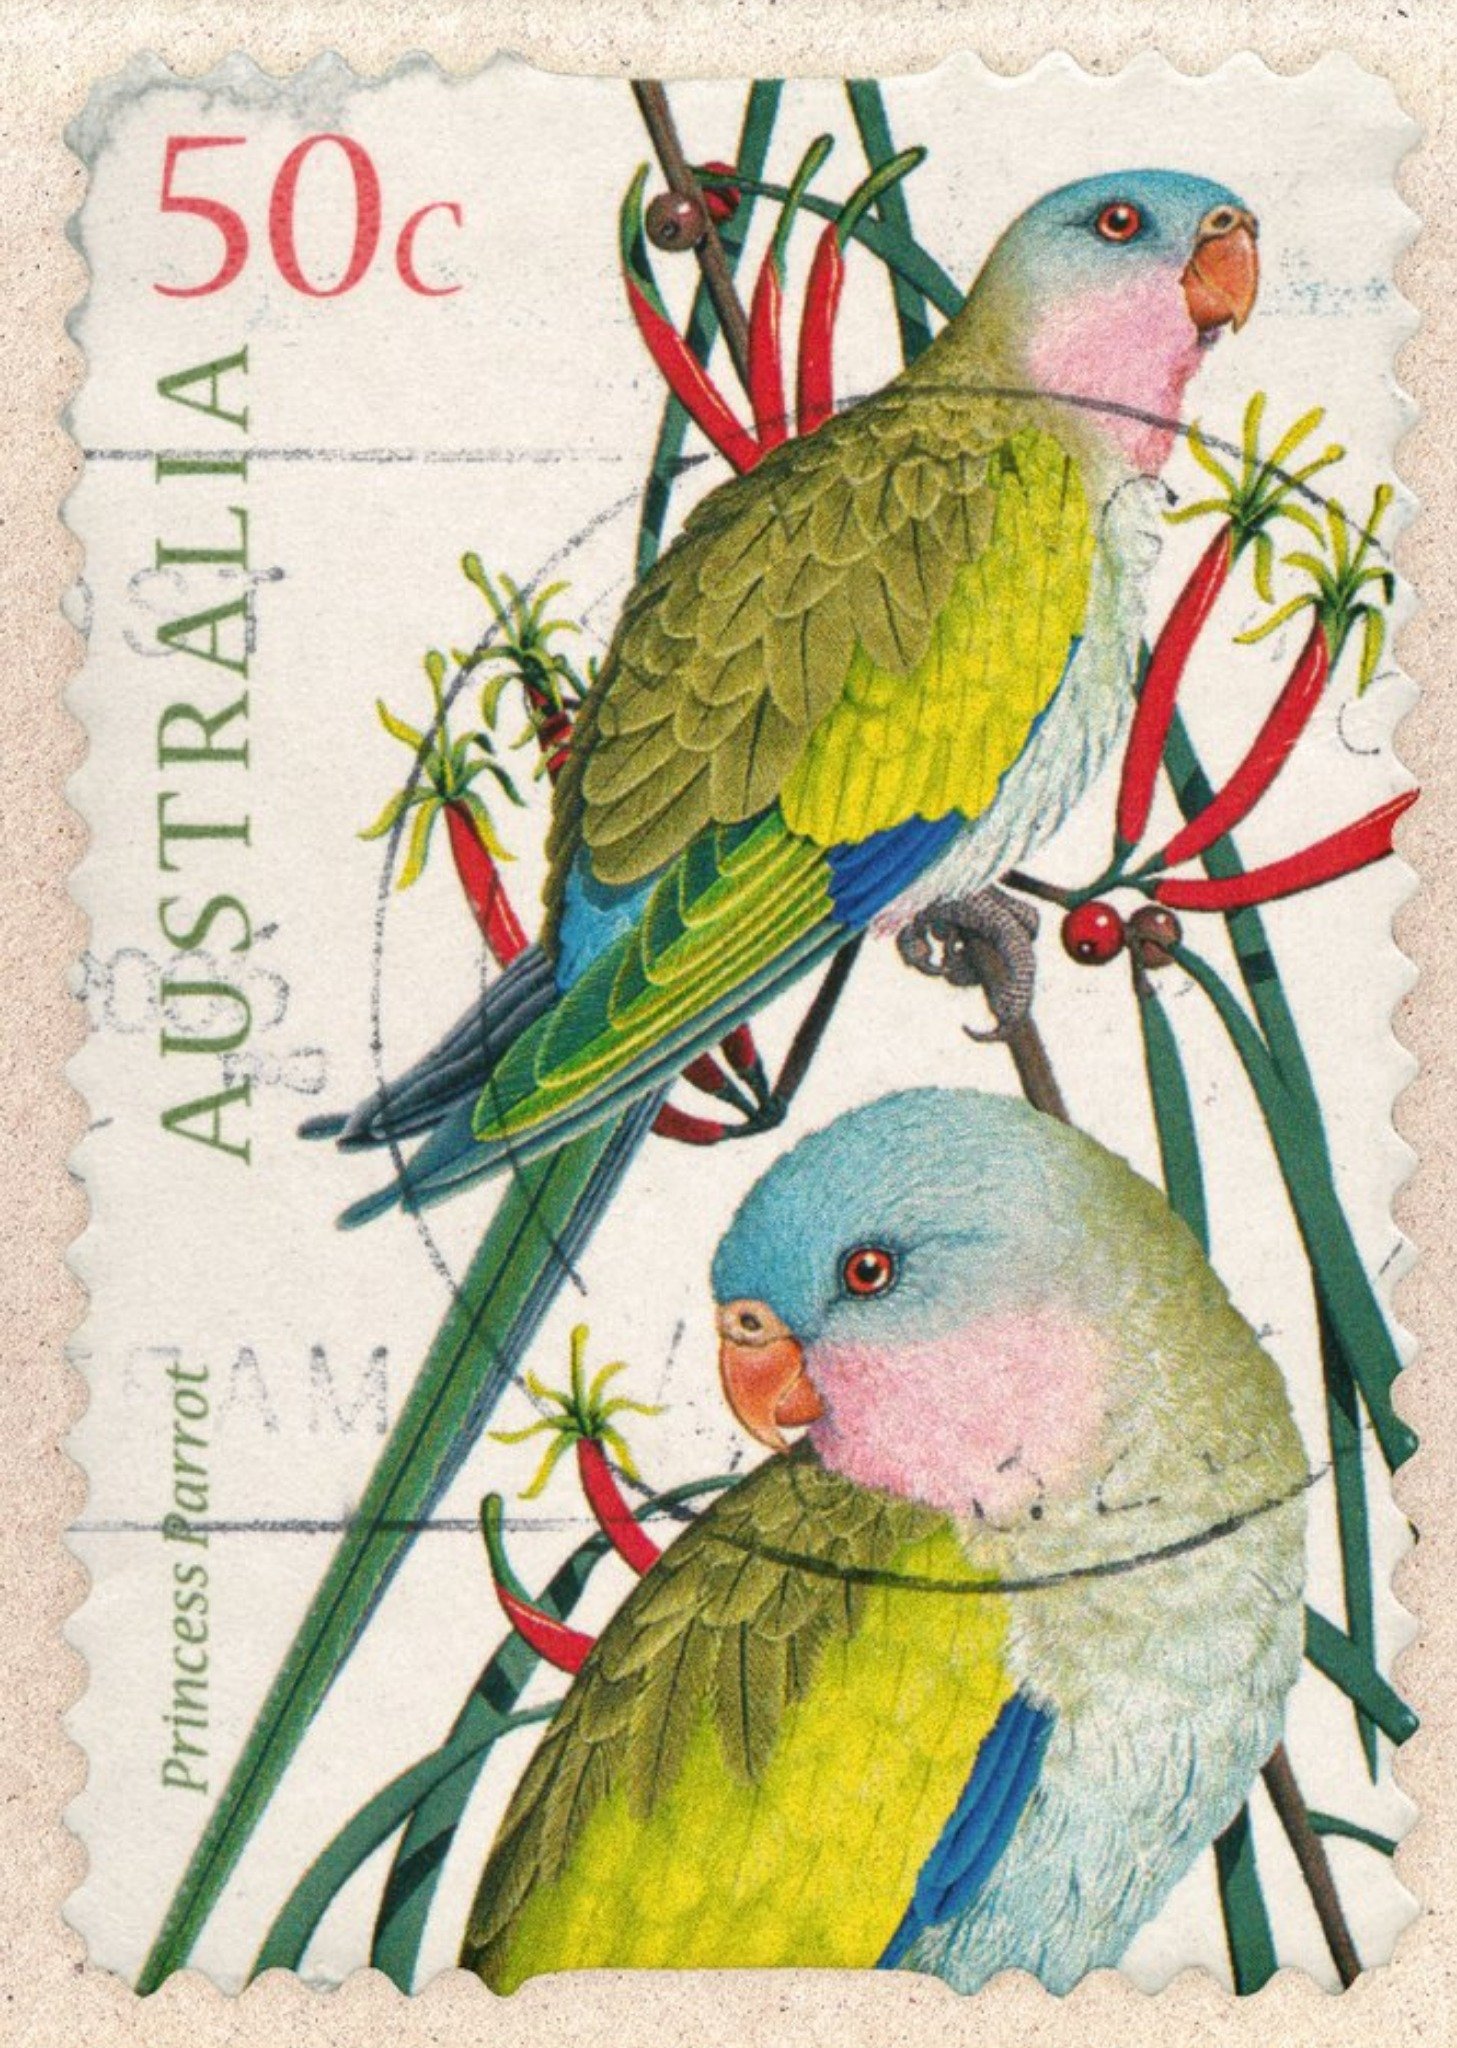 Moonpig Colourful Bird Stamp Card Ecard